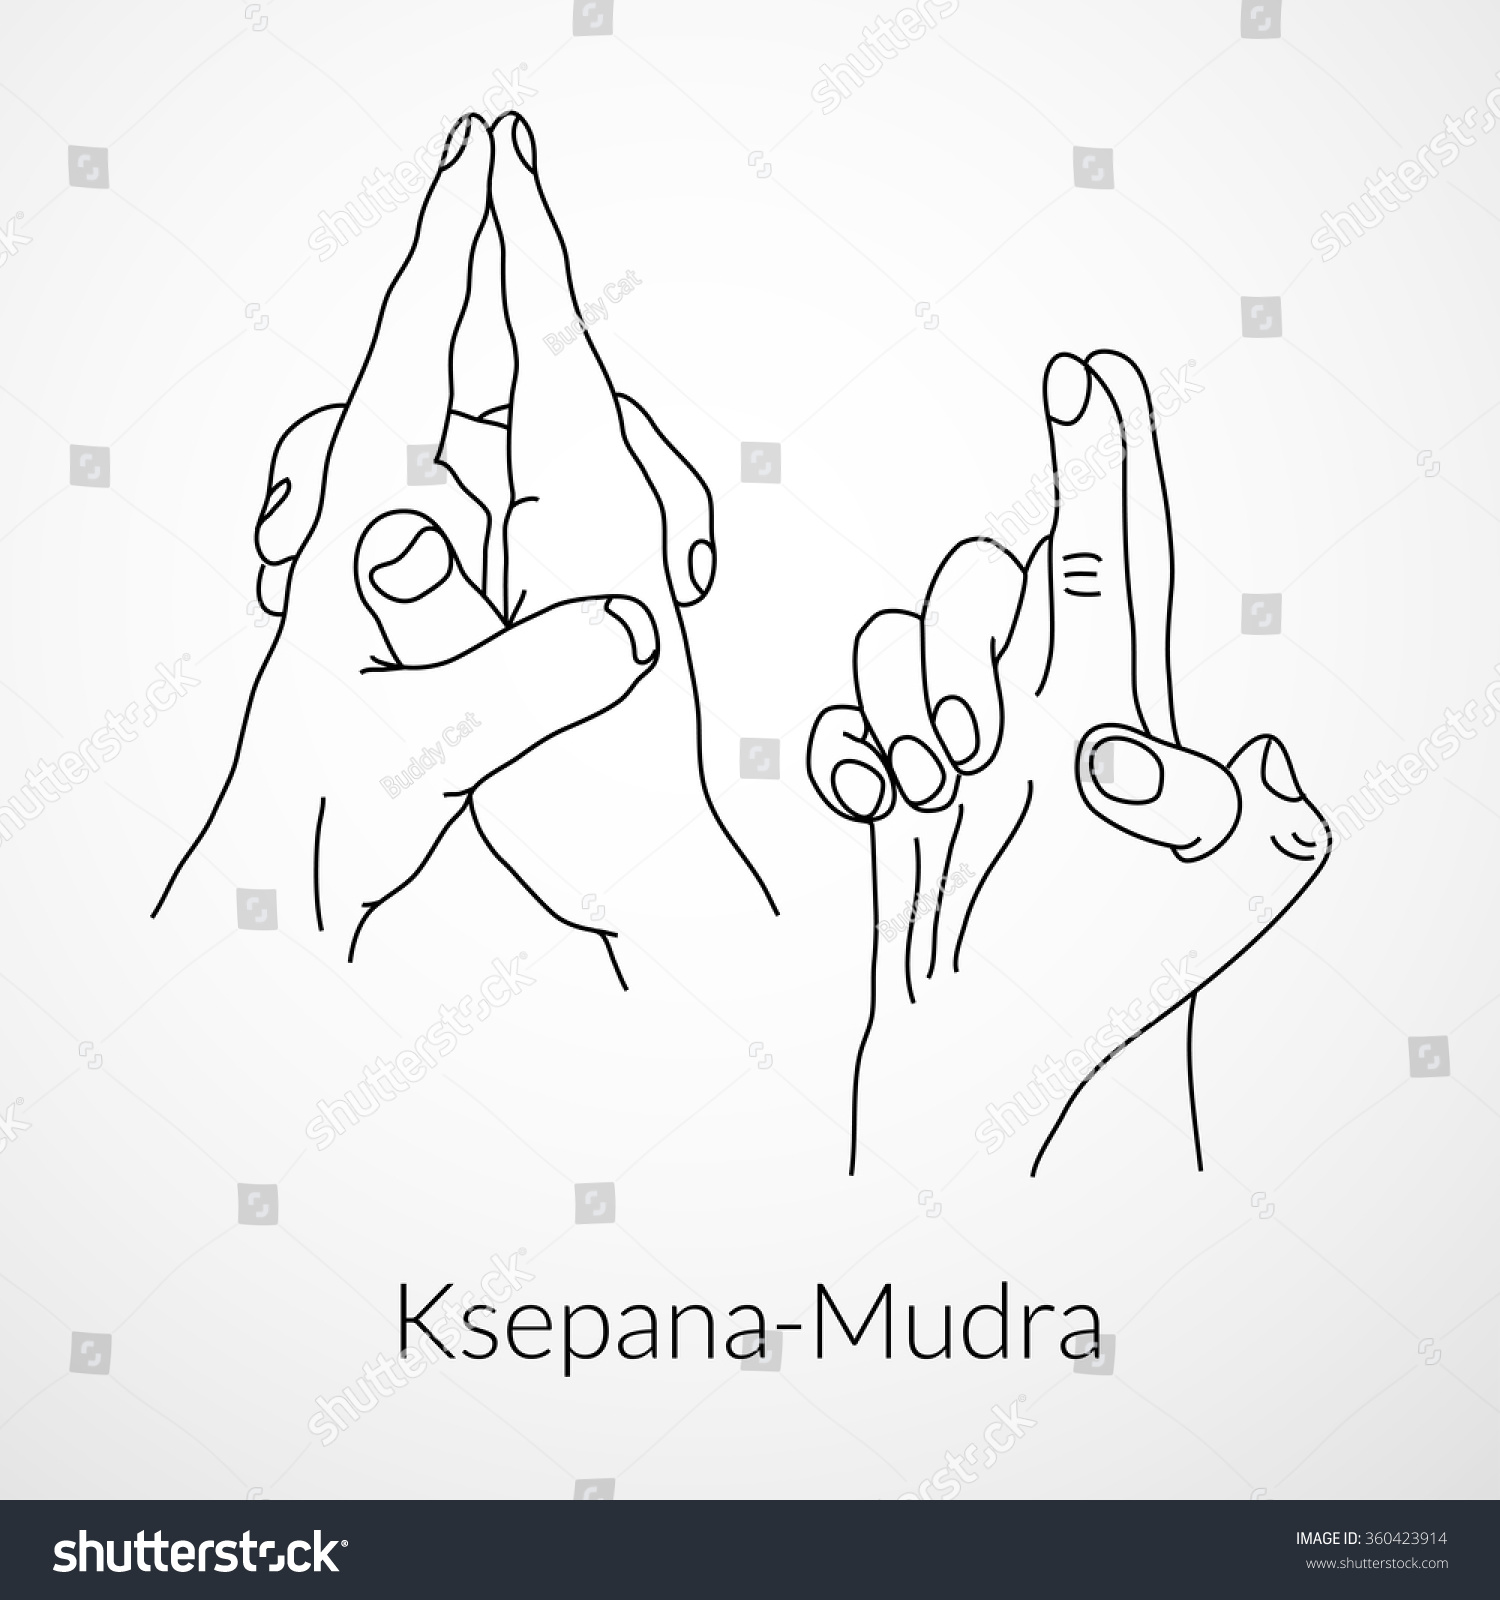 Mudra ksepana Revolved High